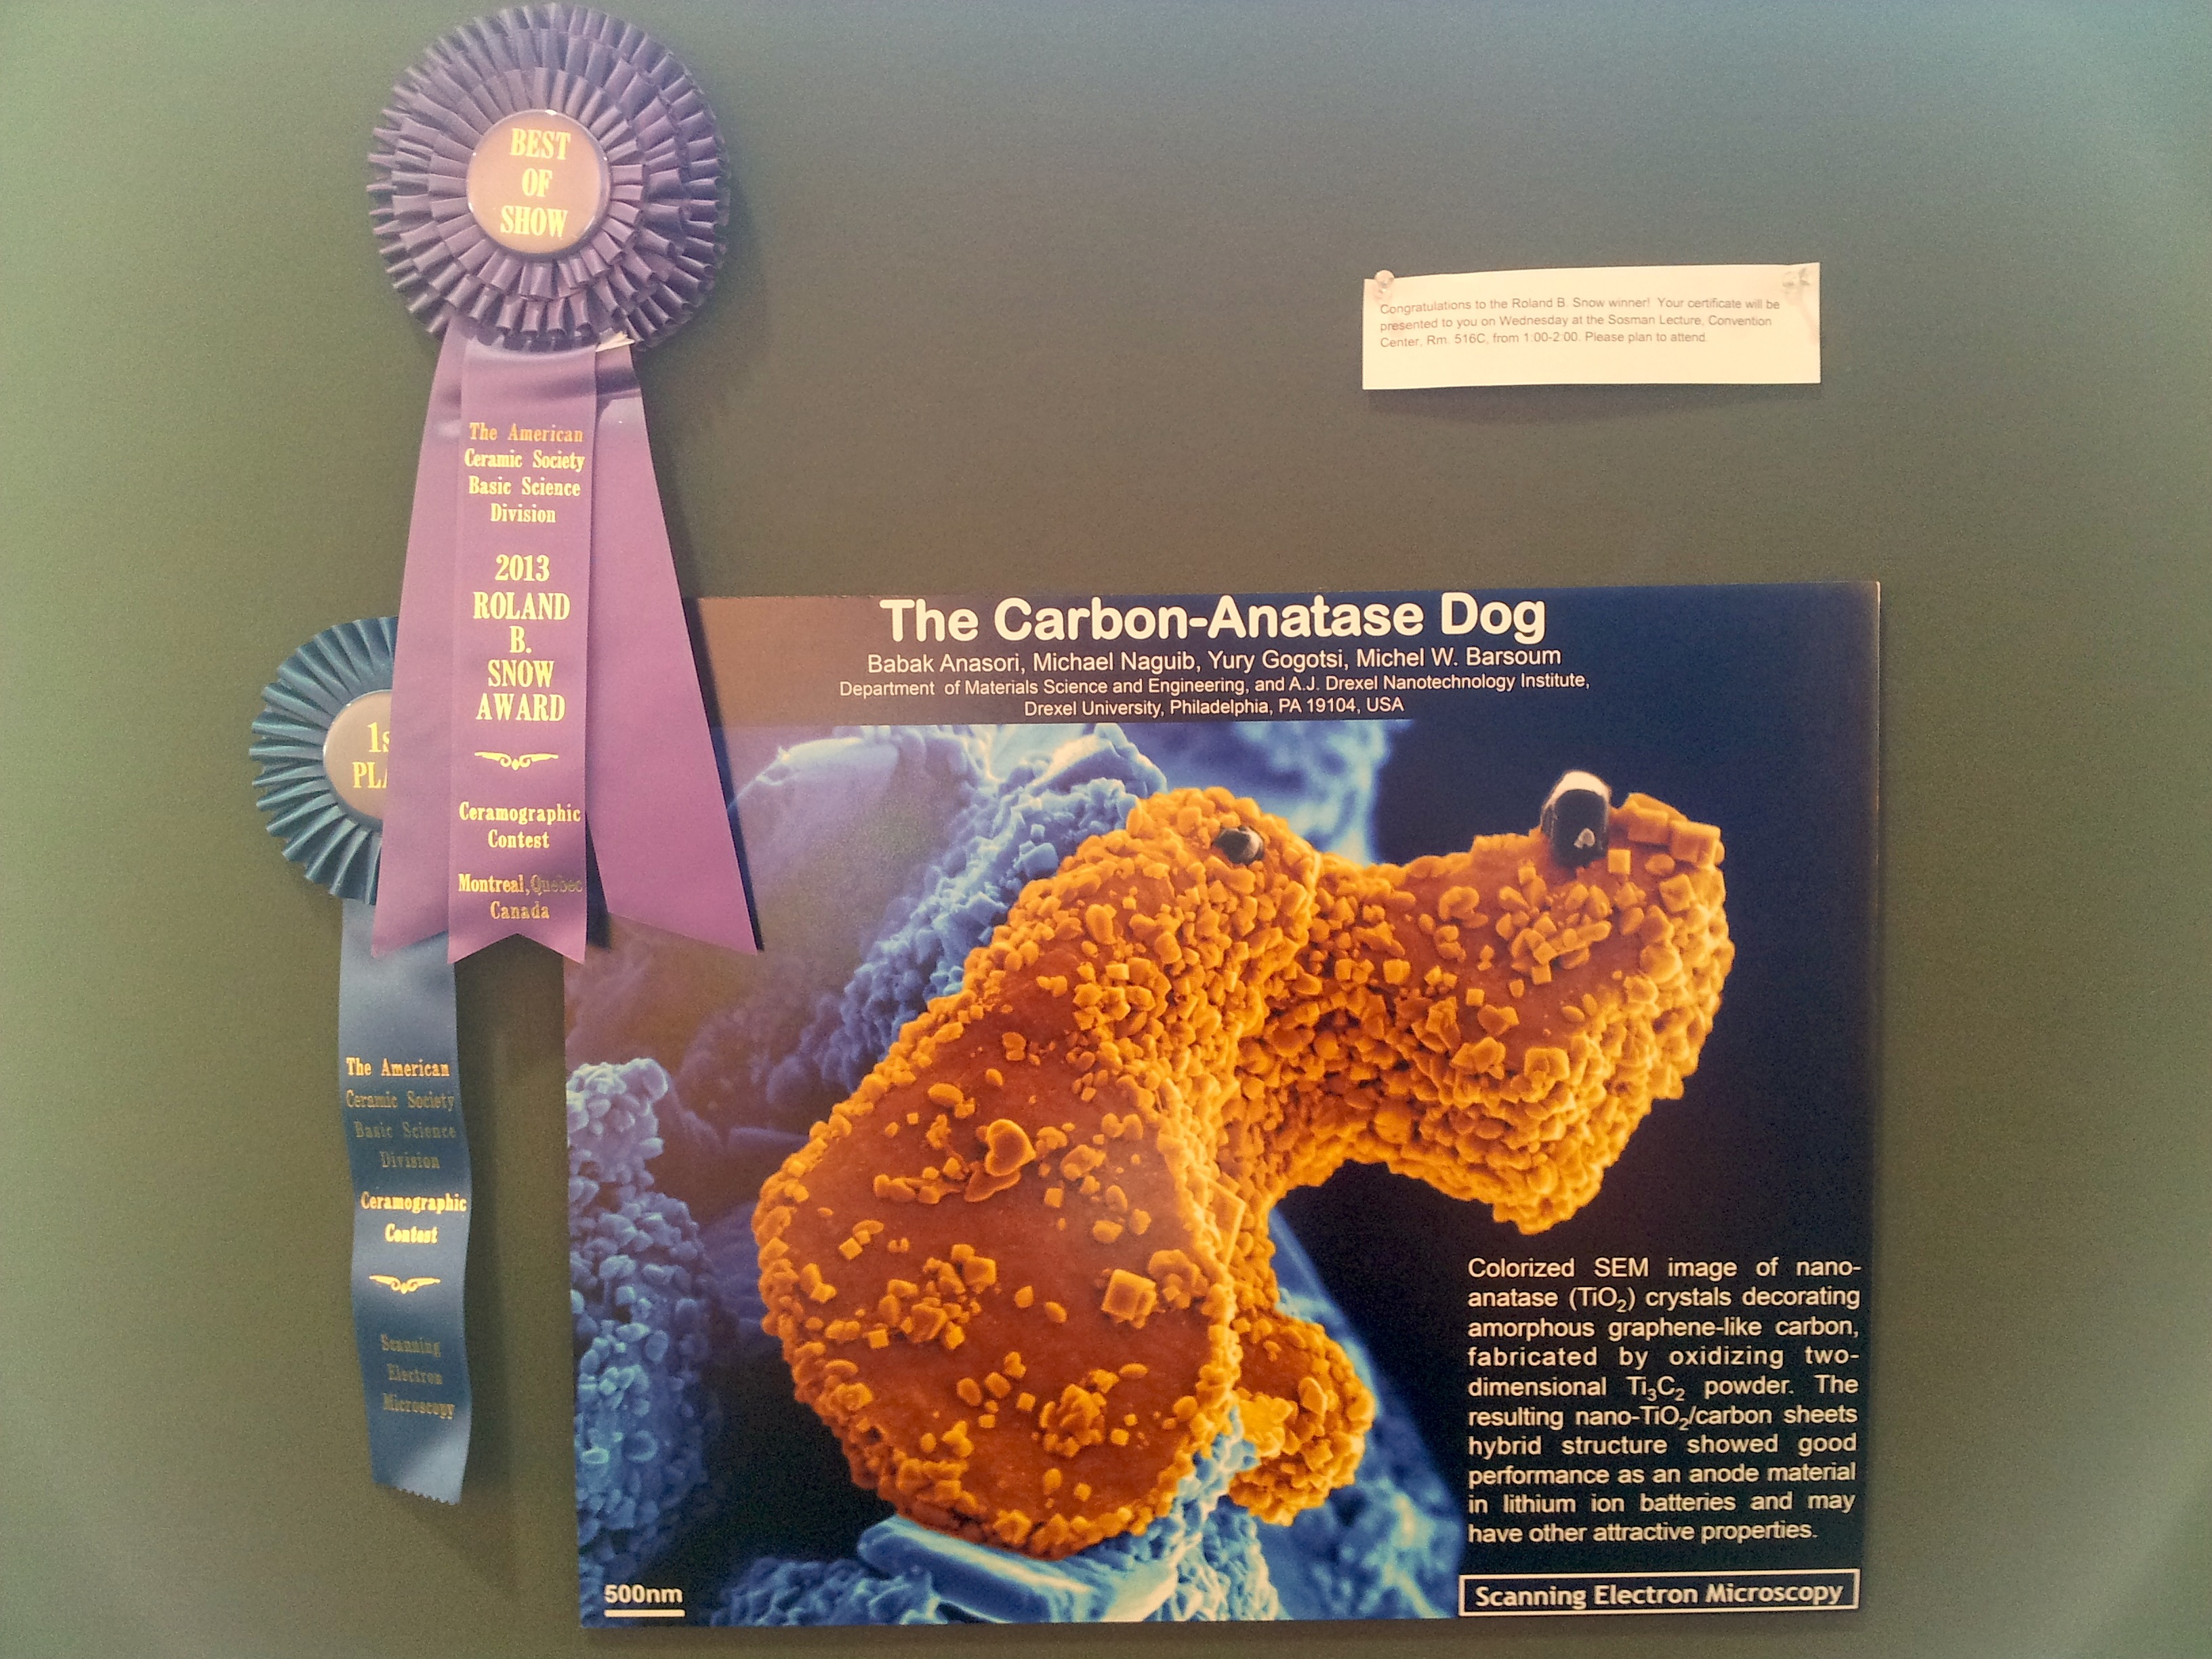 Roland B. Snow Award 2013 for The Carbon-Anatase Dog, 